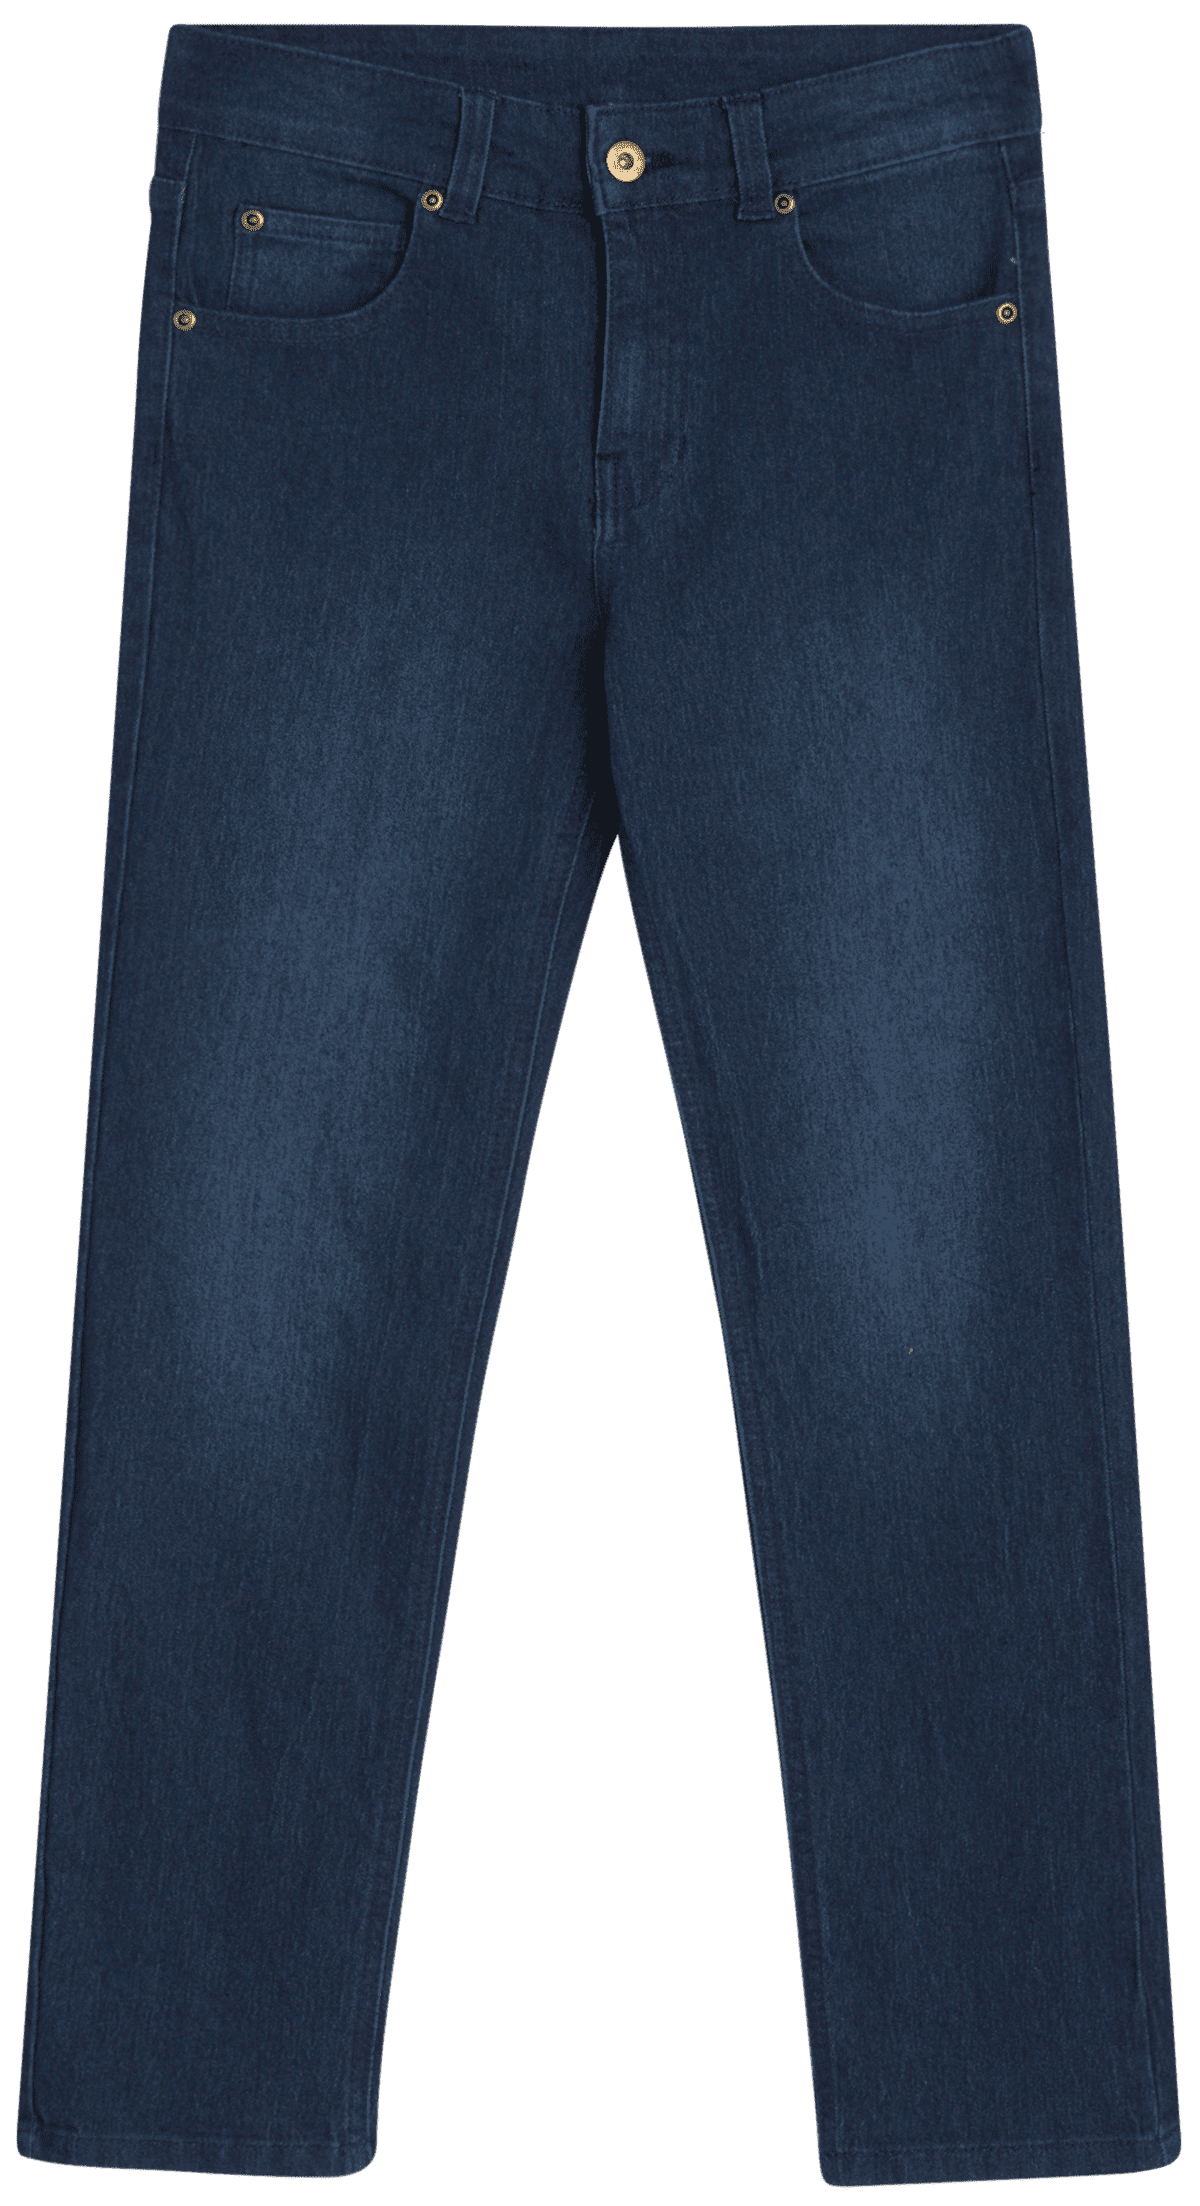 Shop Boys Jeans (0-3 Years) Online in India - Westside